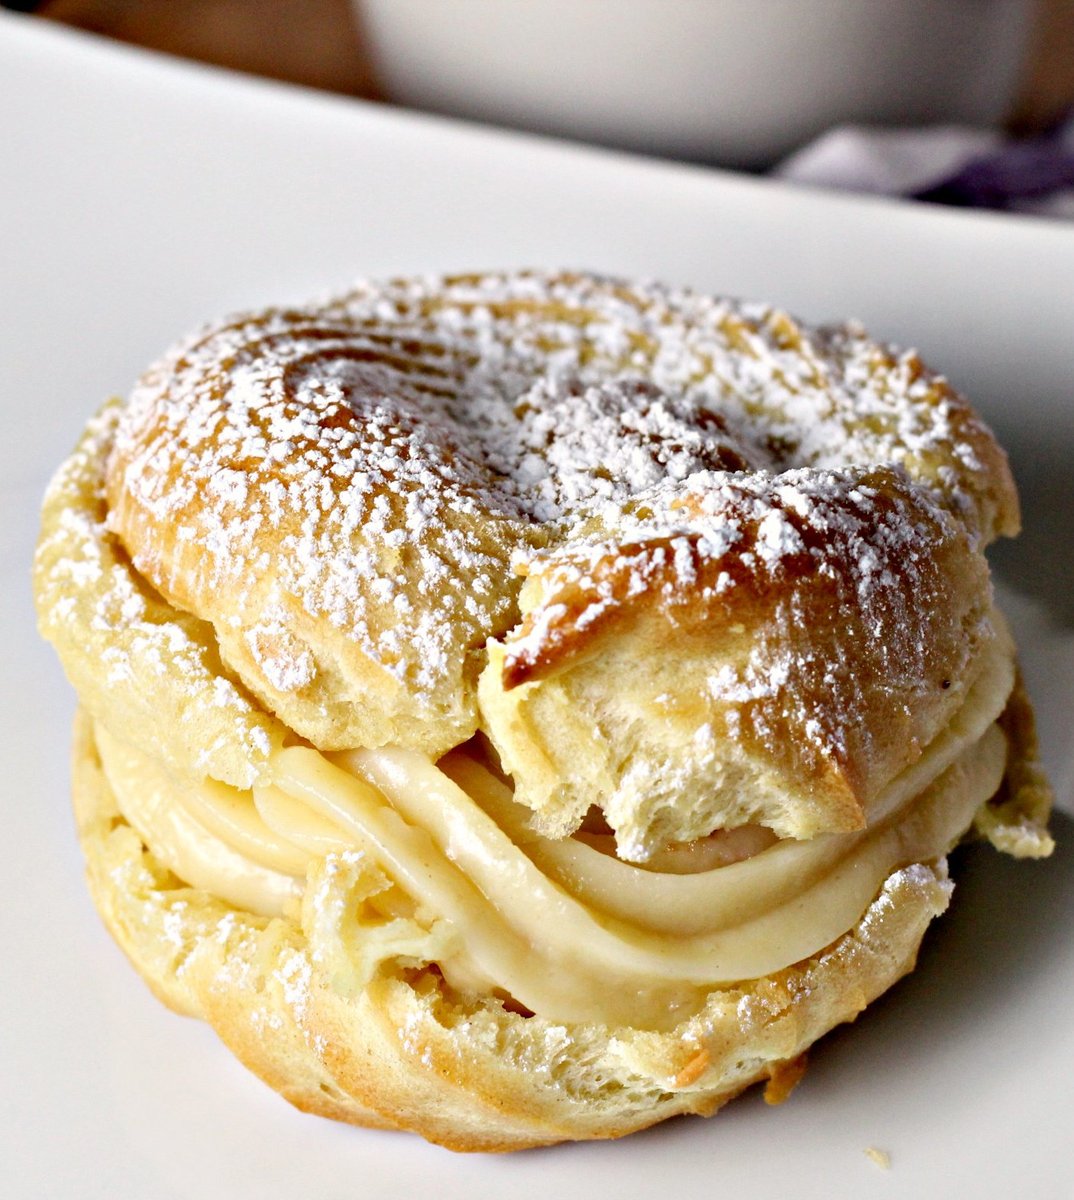 Italian cream puffs with custard filling (St. Joseph’s day pastries)!
recipe @ joanne-eatswellwithothers.com/2012/02/recipe…